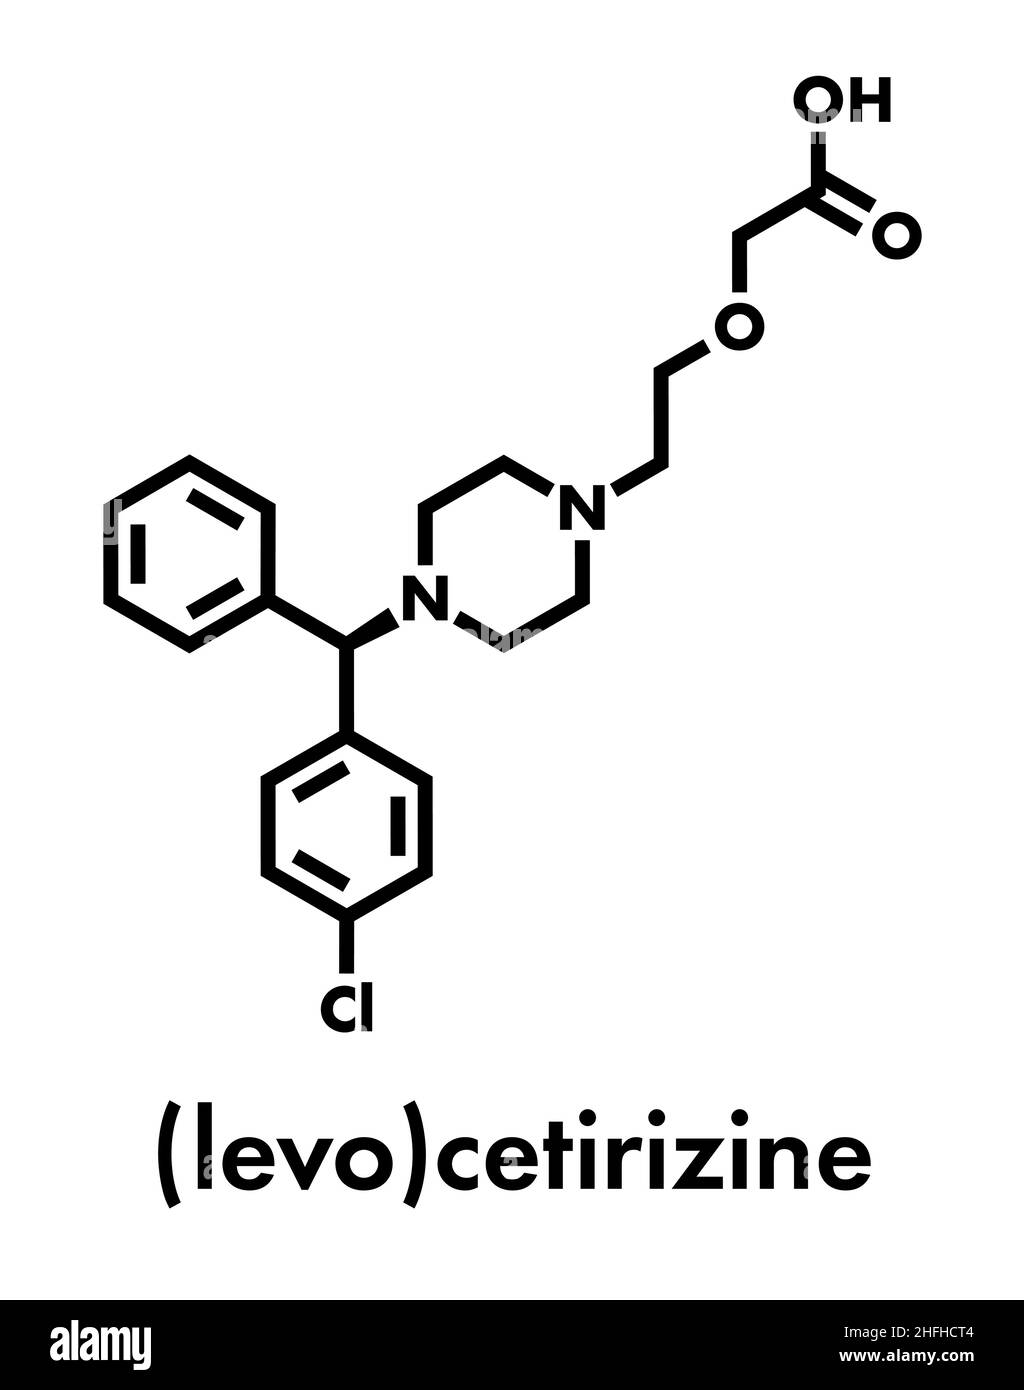 Cetirizine (levocetirizine) antihistamine drug molecule. Used to treat hay fever, urticaria and allergies. Skeletal formula. Stock Vector